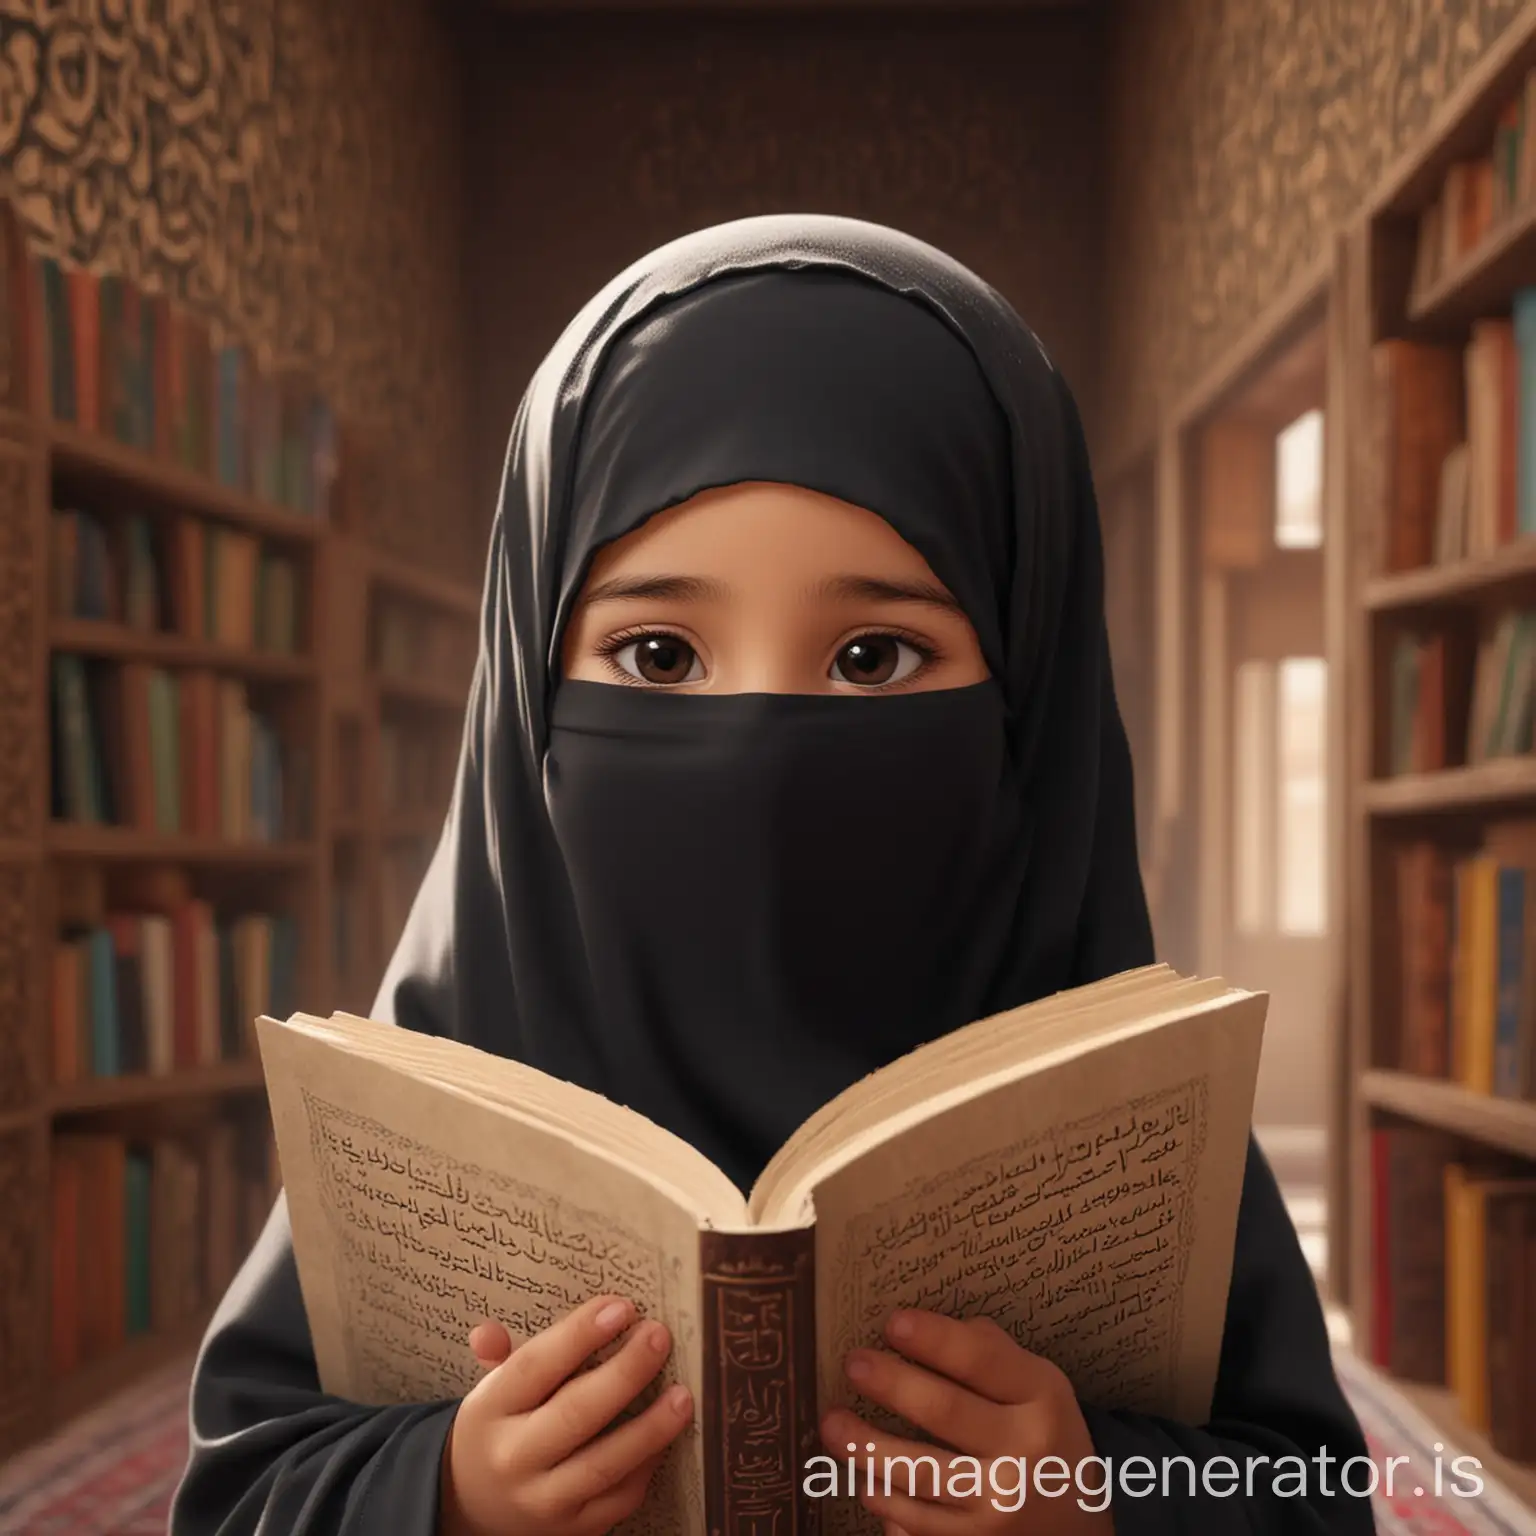 Joyful-Child-in-Niqab-Reading-Islamic-Texts